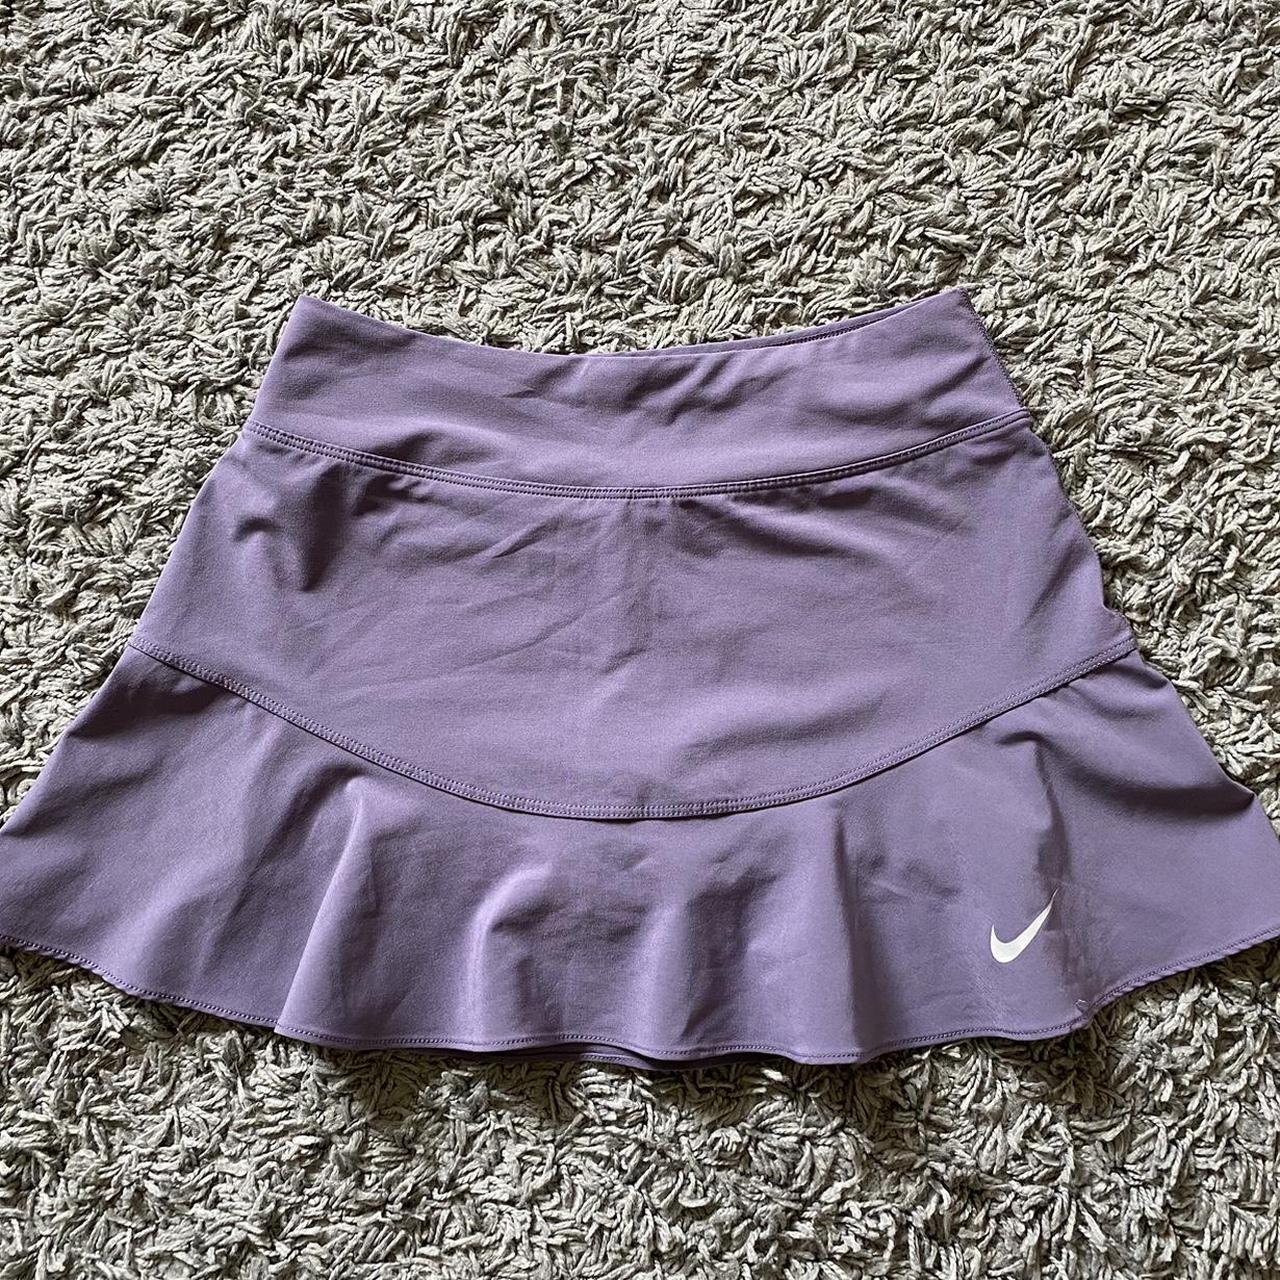 Nike xs purple tennis skirt 
⭐️super cute and girly...